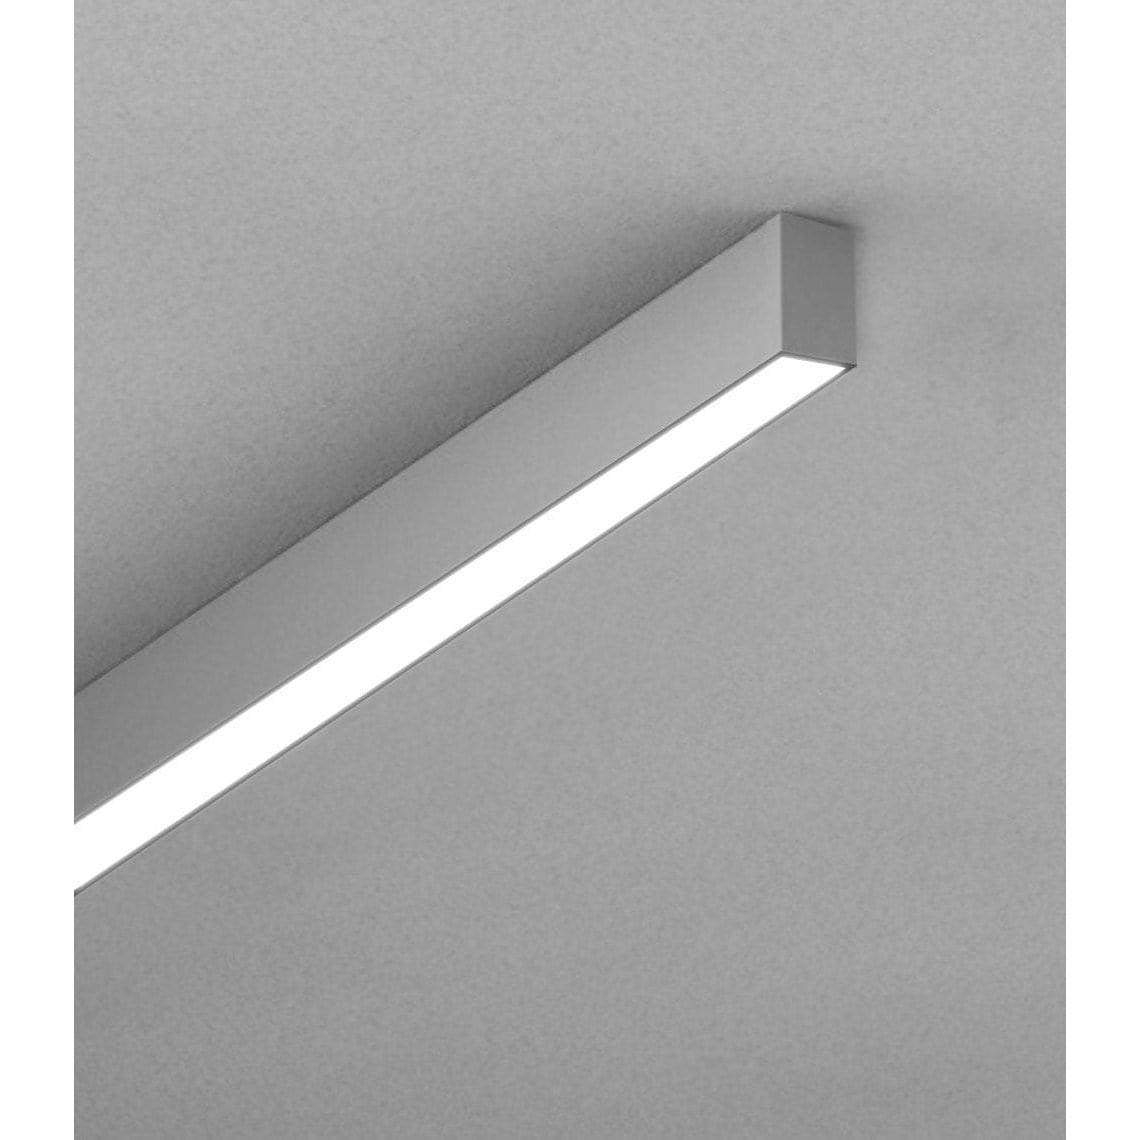 POE Texas Lighting Denton Suspended Linear PoE Lights - Sample 1.3" x 2' Linear Diffuser 2 ft, 3000K (Surface)